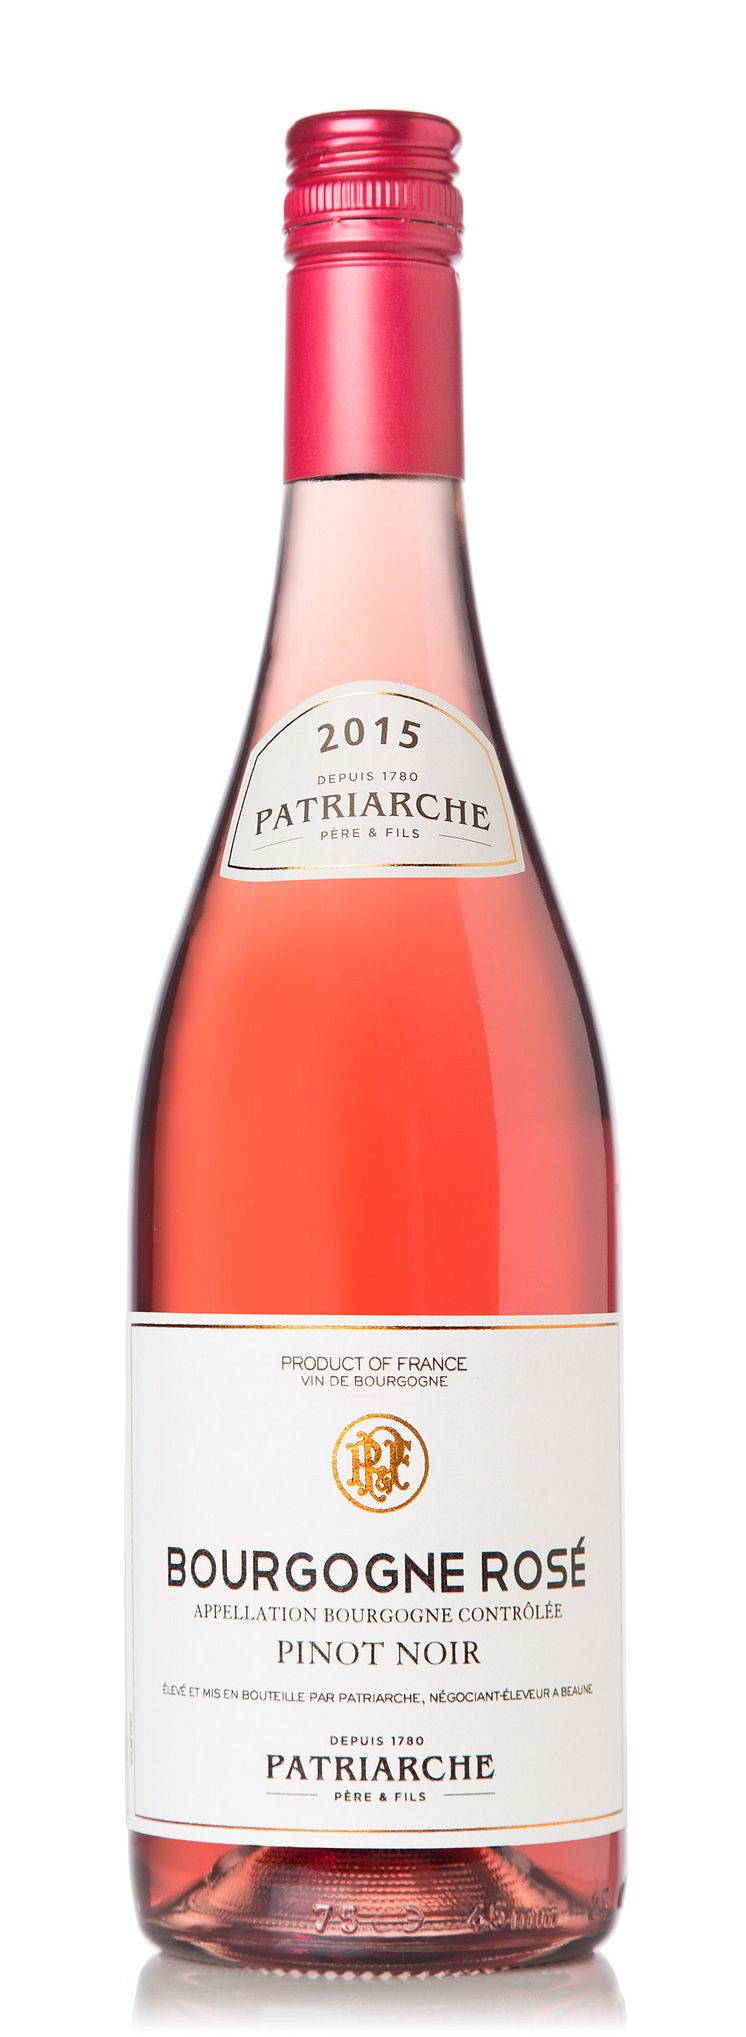 Nyhet - Patriarche Bourgogne Rosé 2015 